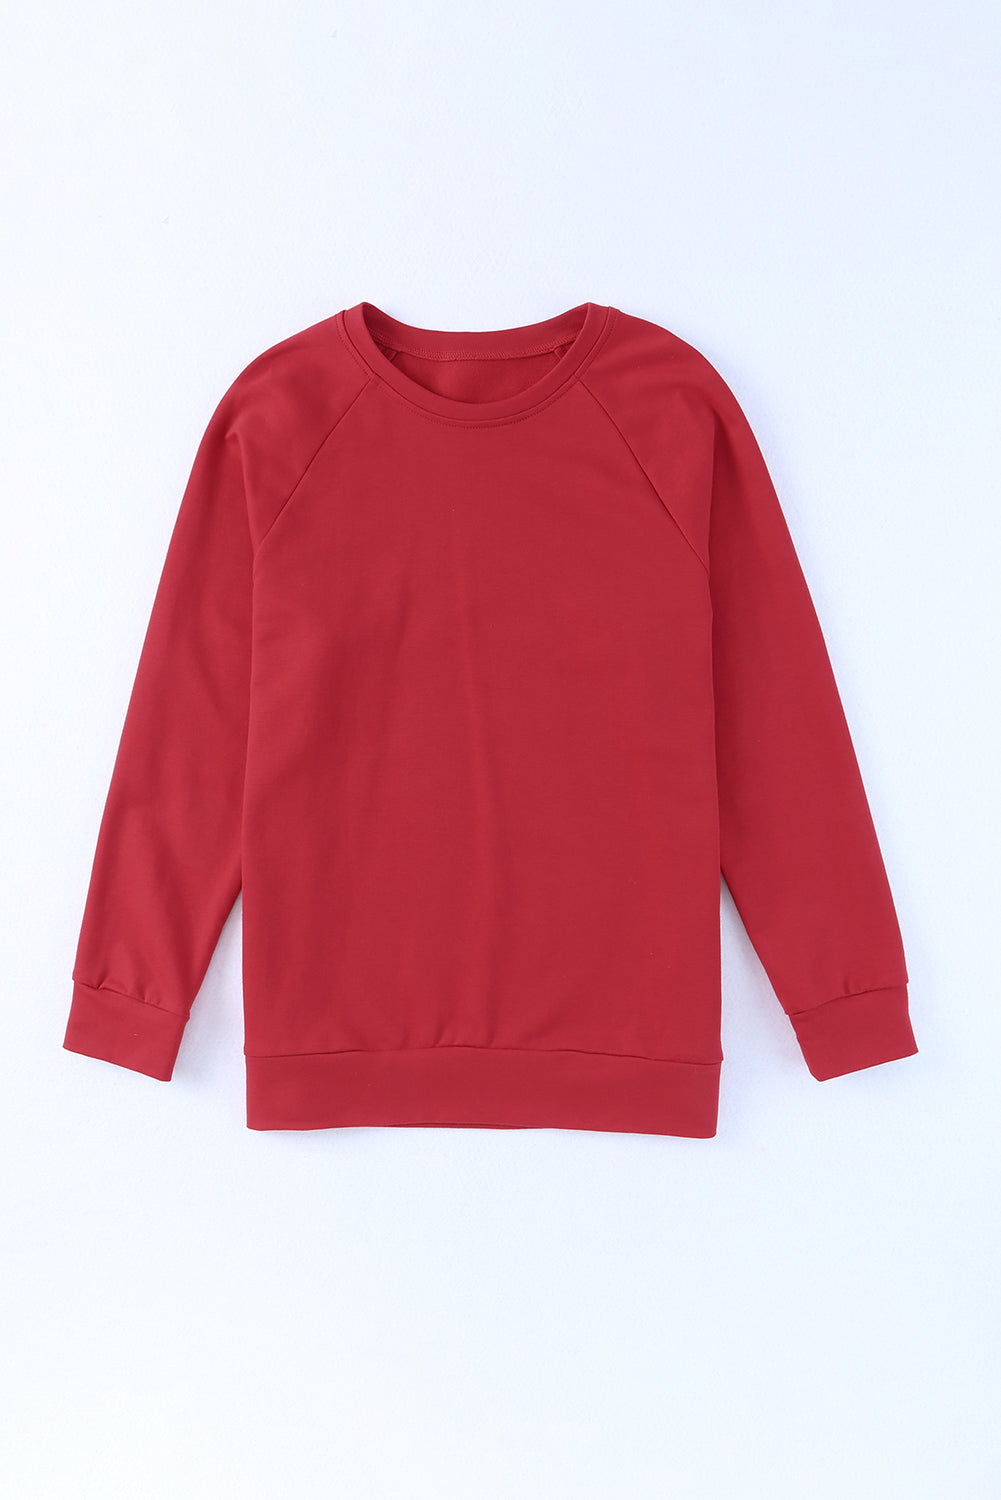 Fiery Red Solid Round Neck Raglan Sleeve Sweatshirt